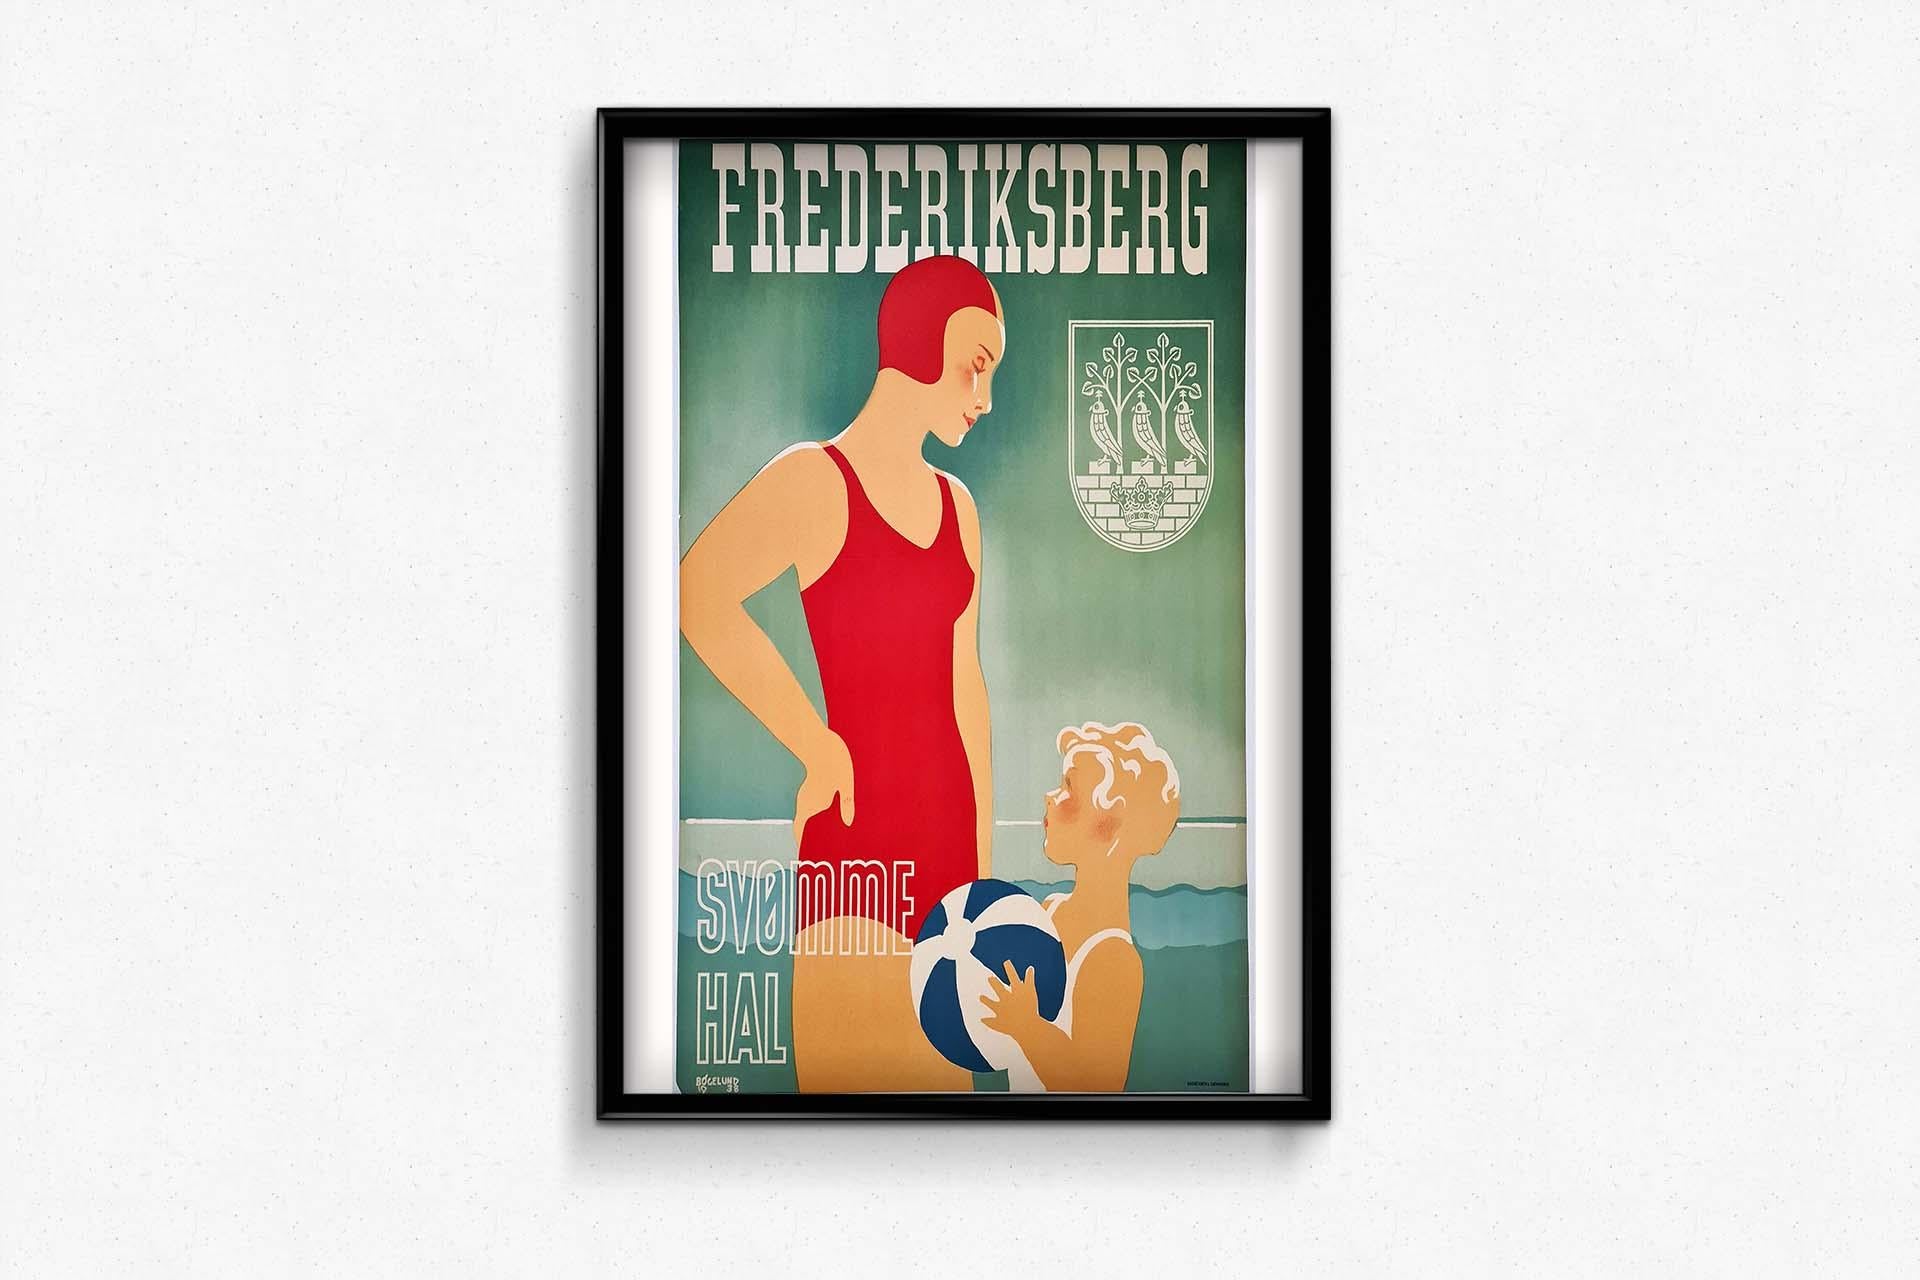 Danish travel poster created by Bogelund (1890-1959) advertising Frederiksberg Svomme Hal, a large indoor public pool in Frederiksberg, Denmark.